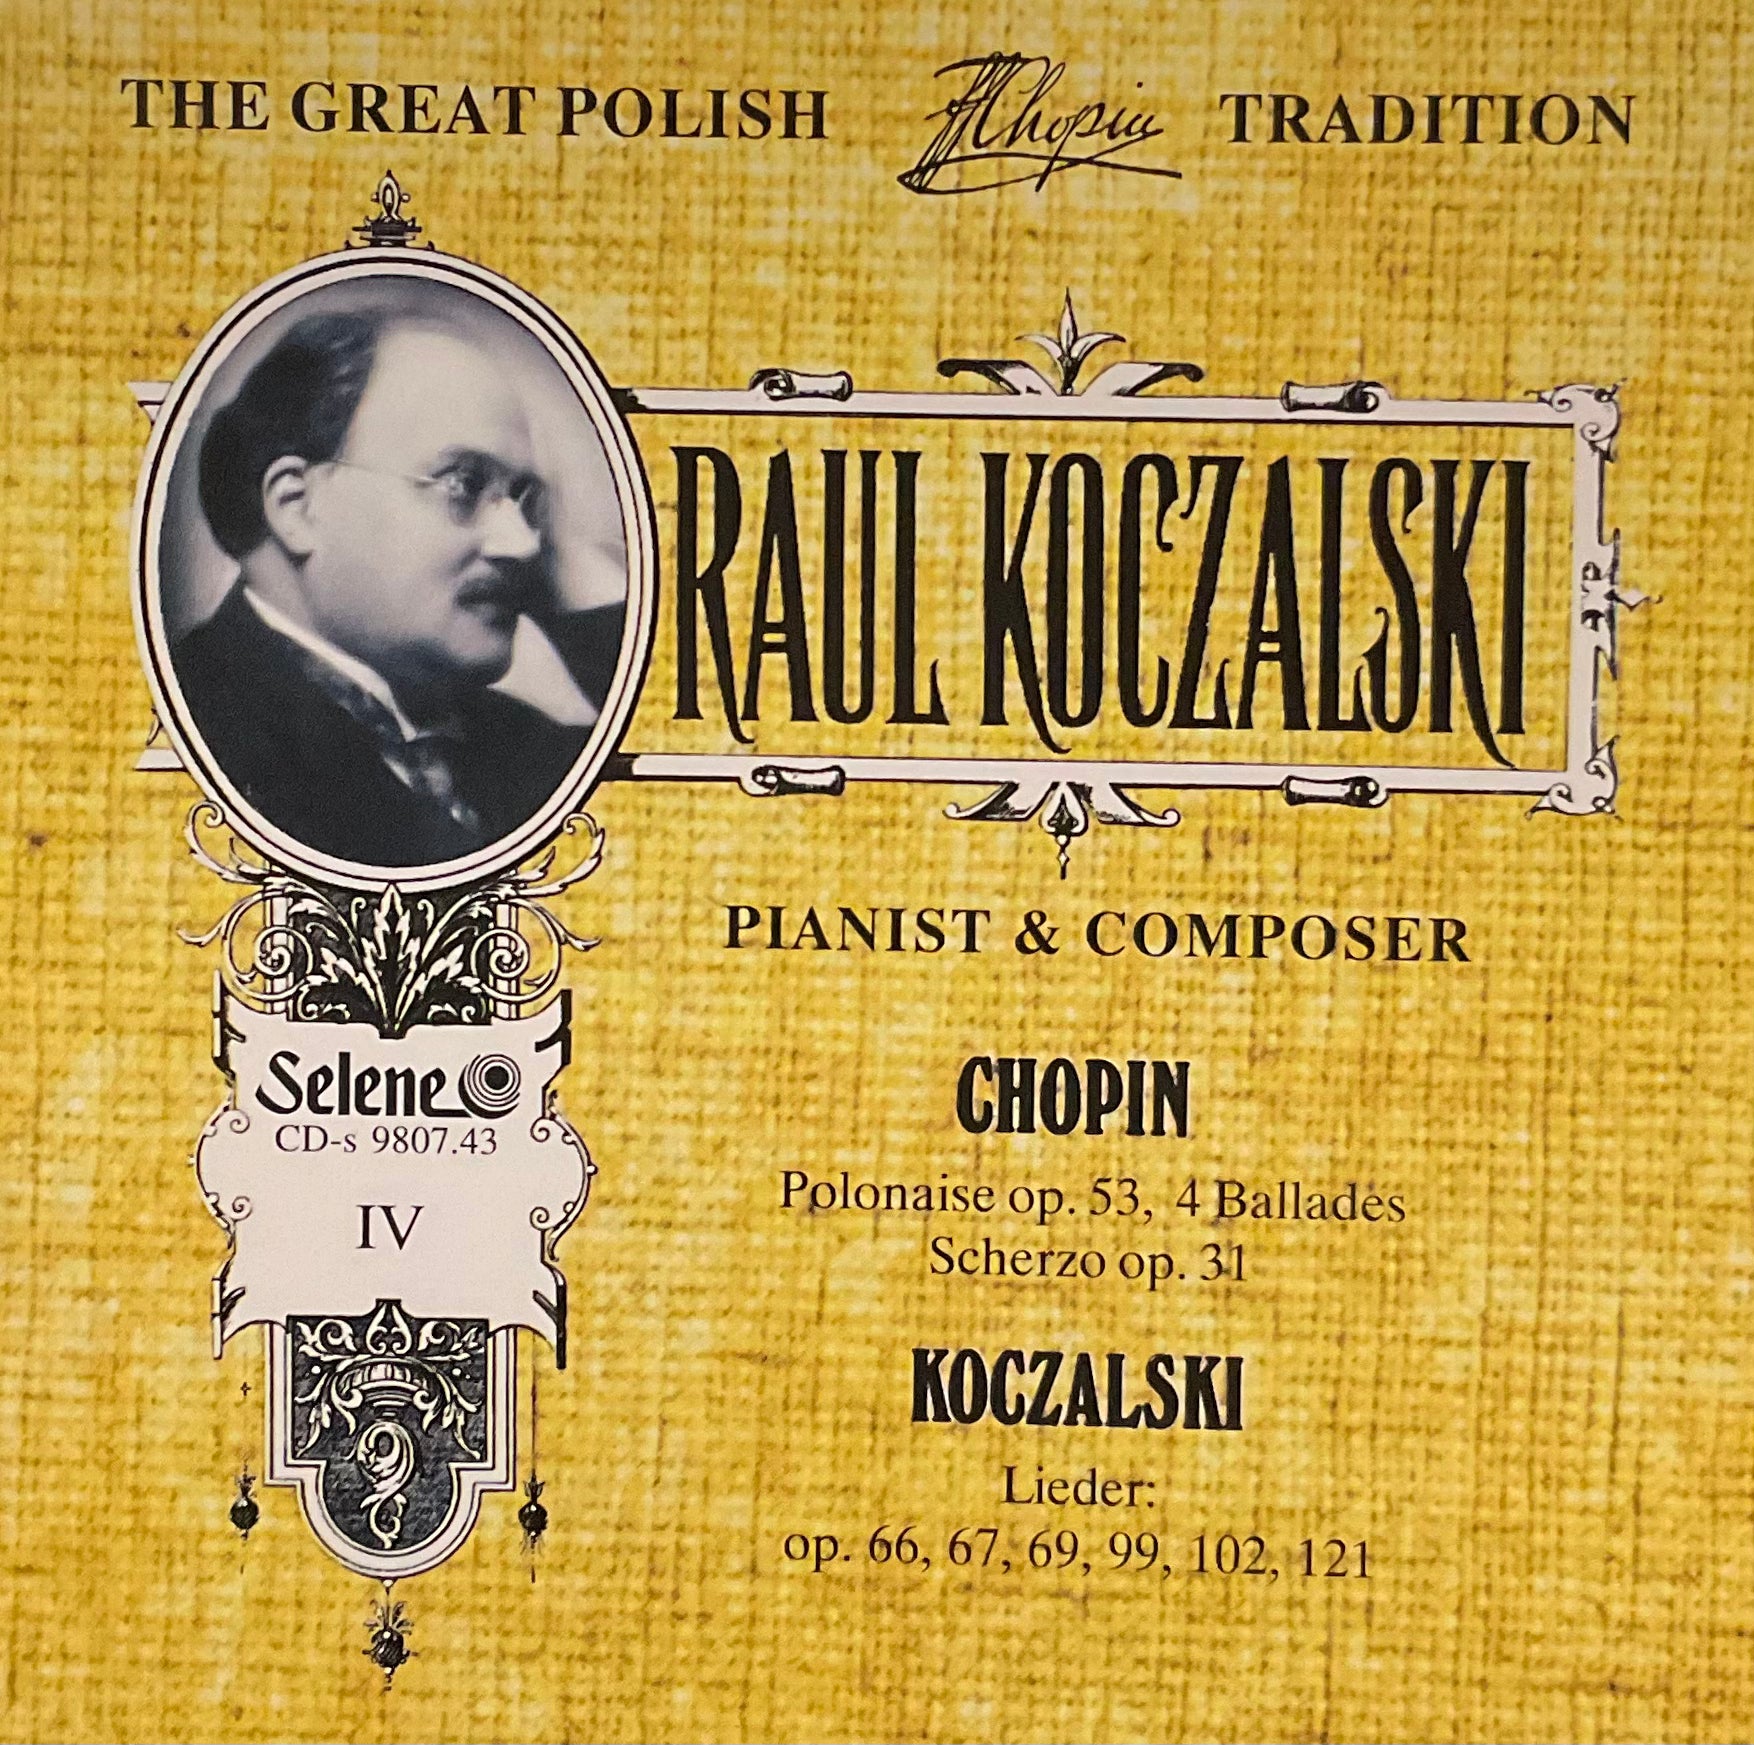 The Great Polish Chopin Tradition - Raul Koczalski Vol. 4